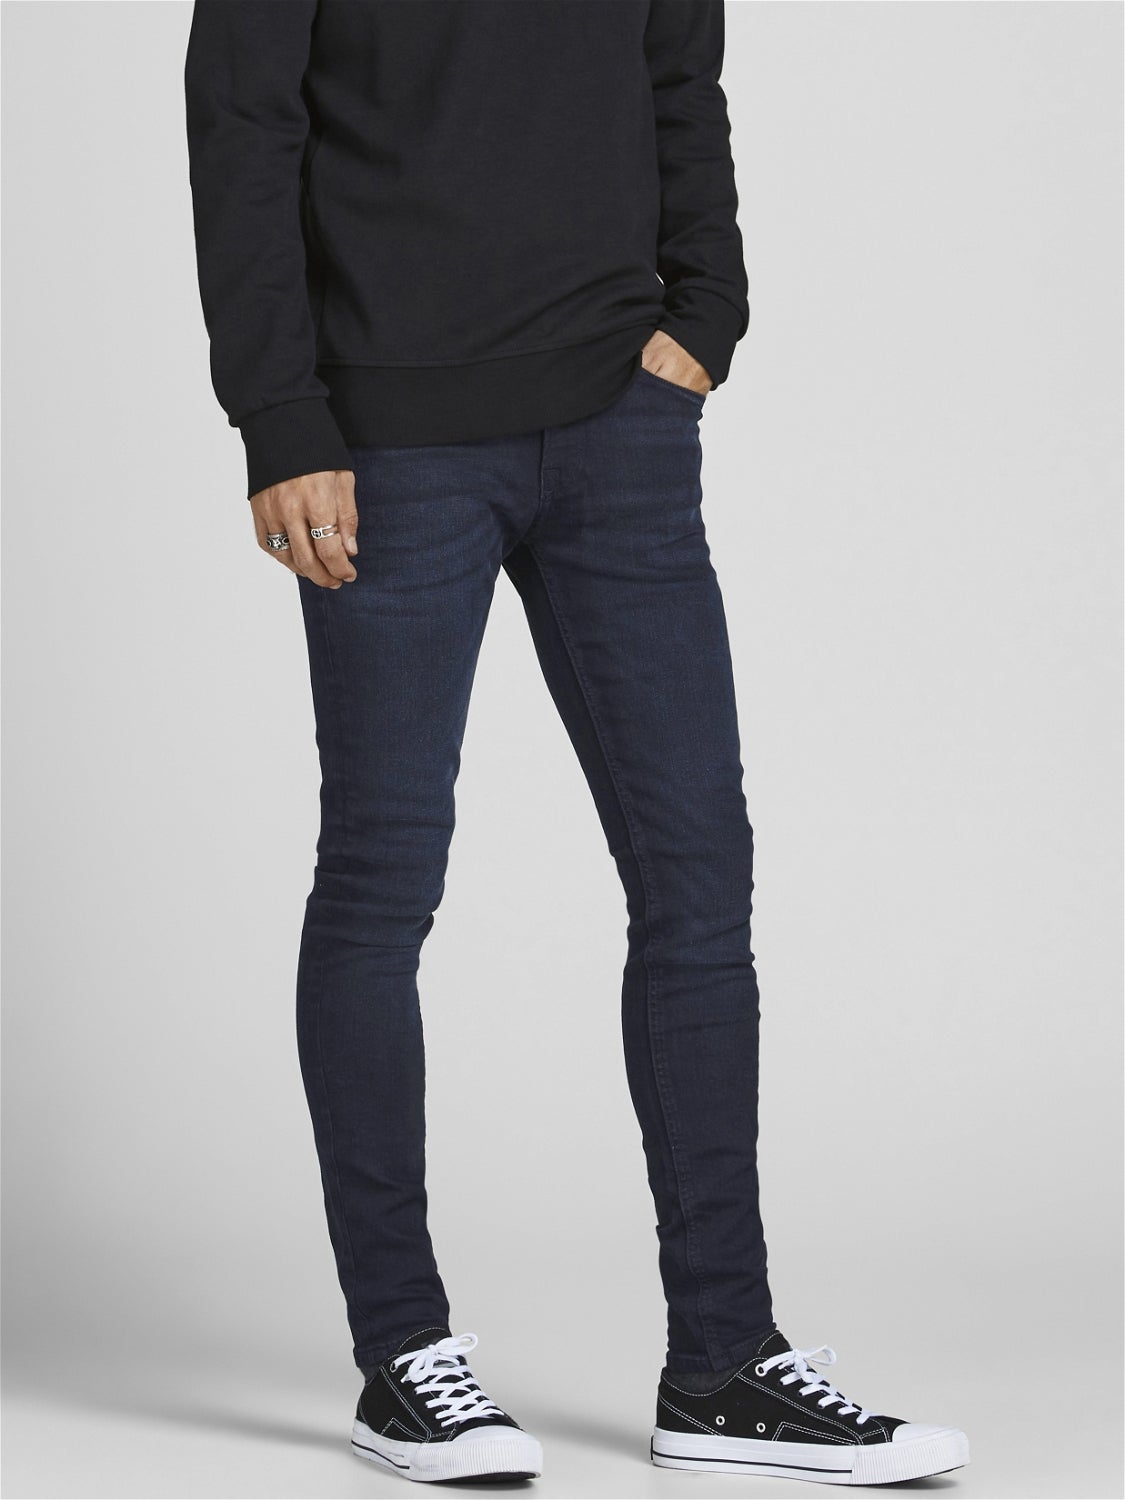 Blind Date Tube jeans korenblauw Jeans-look Mode Spijkerbroeken Tube jeans 